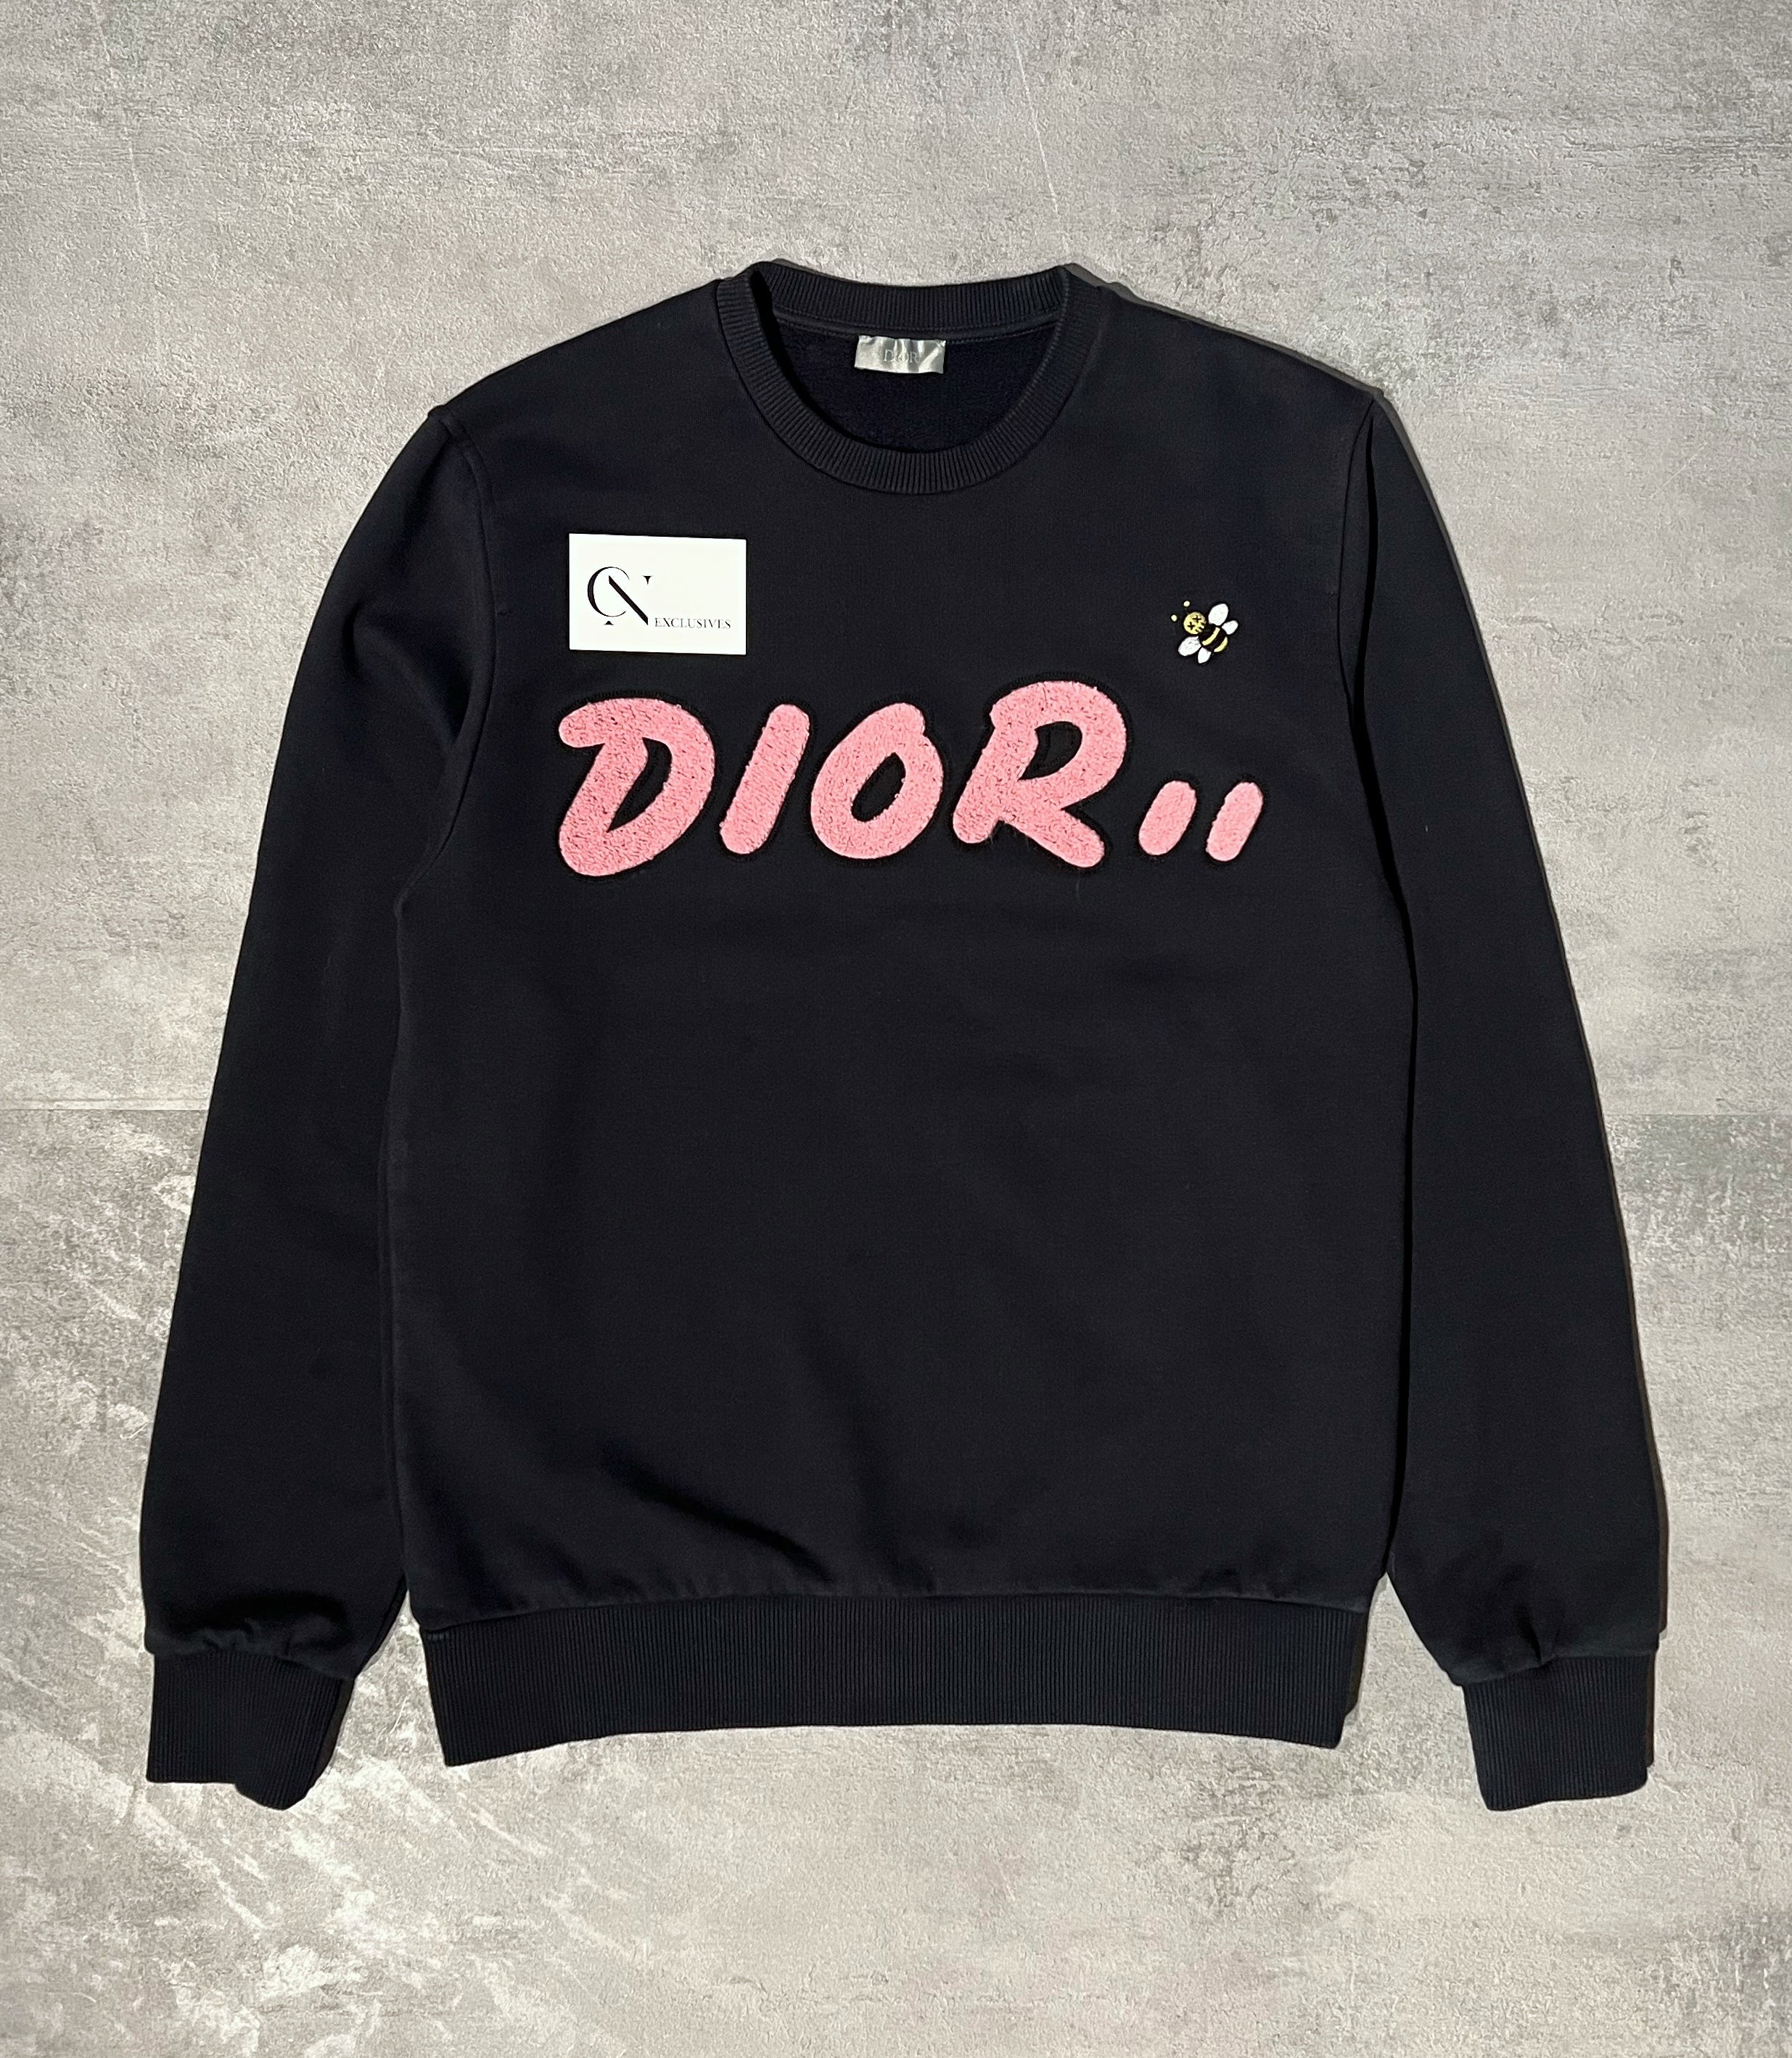 Dior x Kaws Sweater